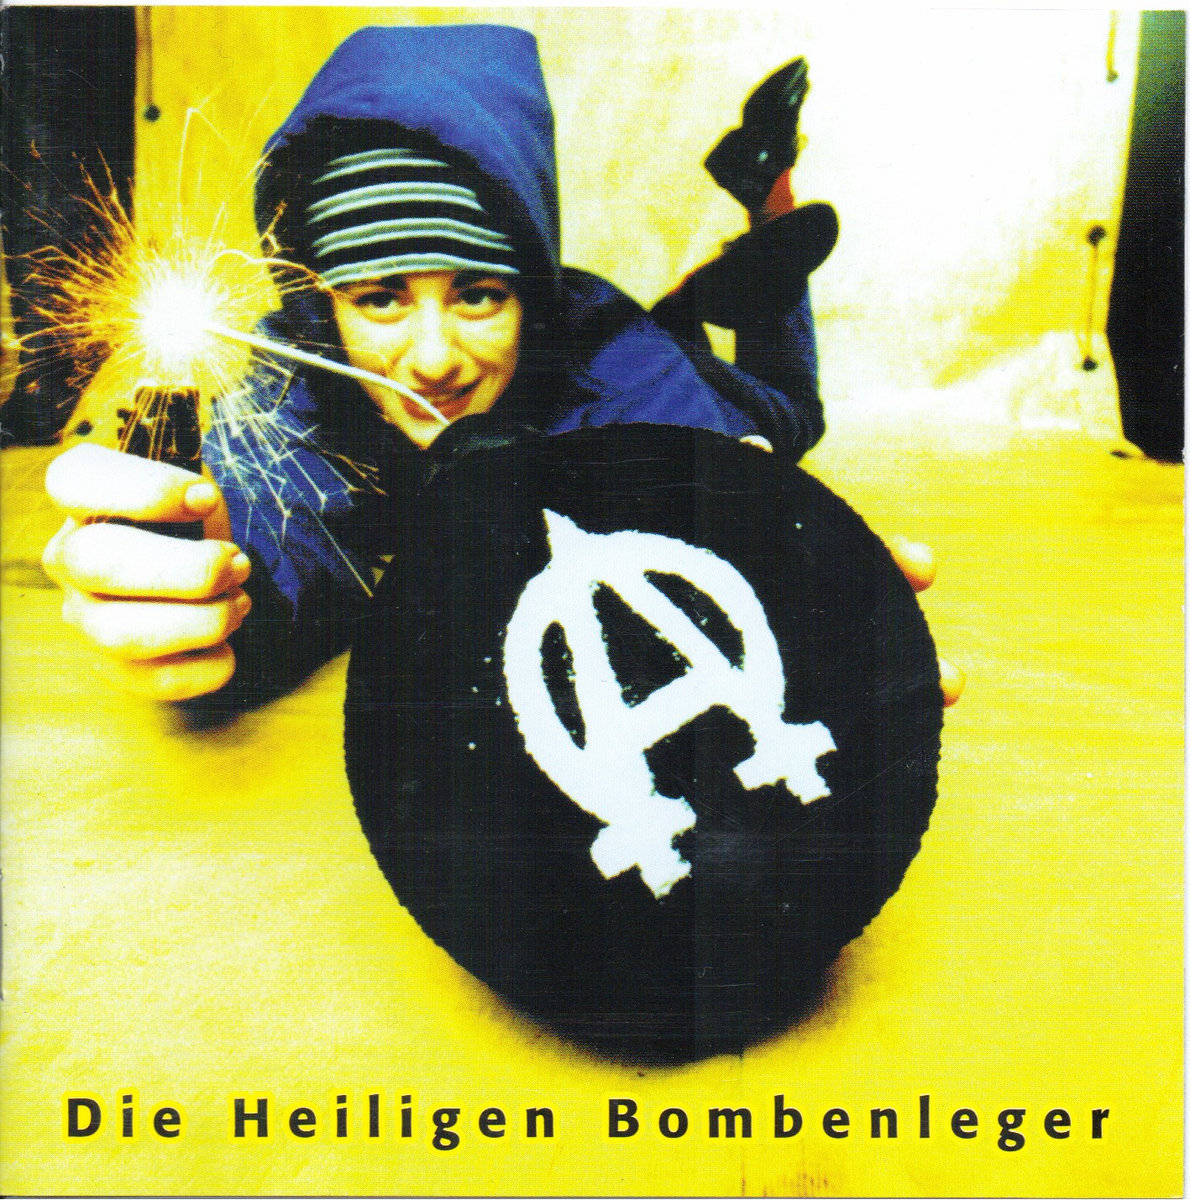 Die Heiligen Bombenleger. by Die Heiligen Bombenleger. gift given). 